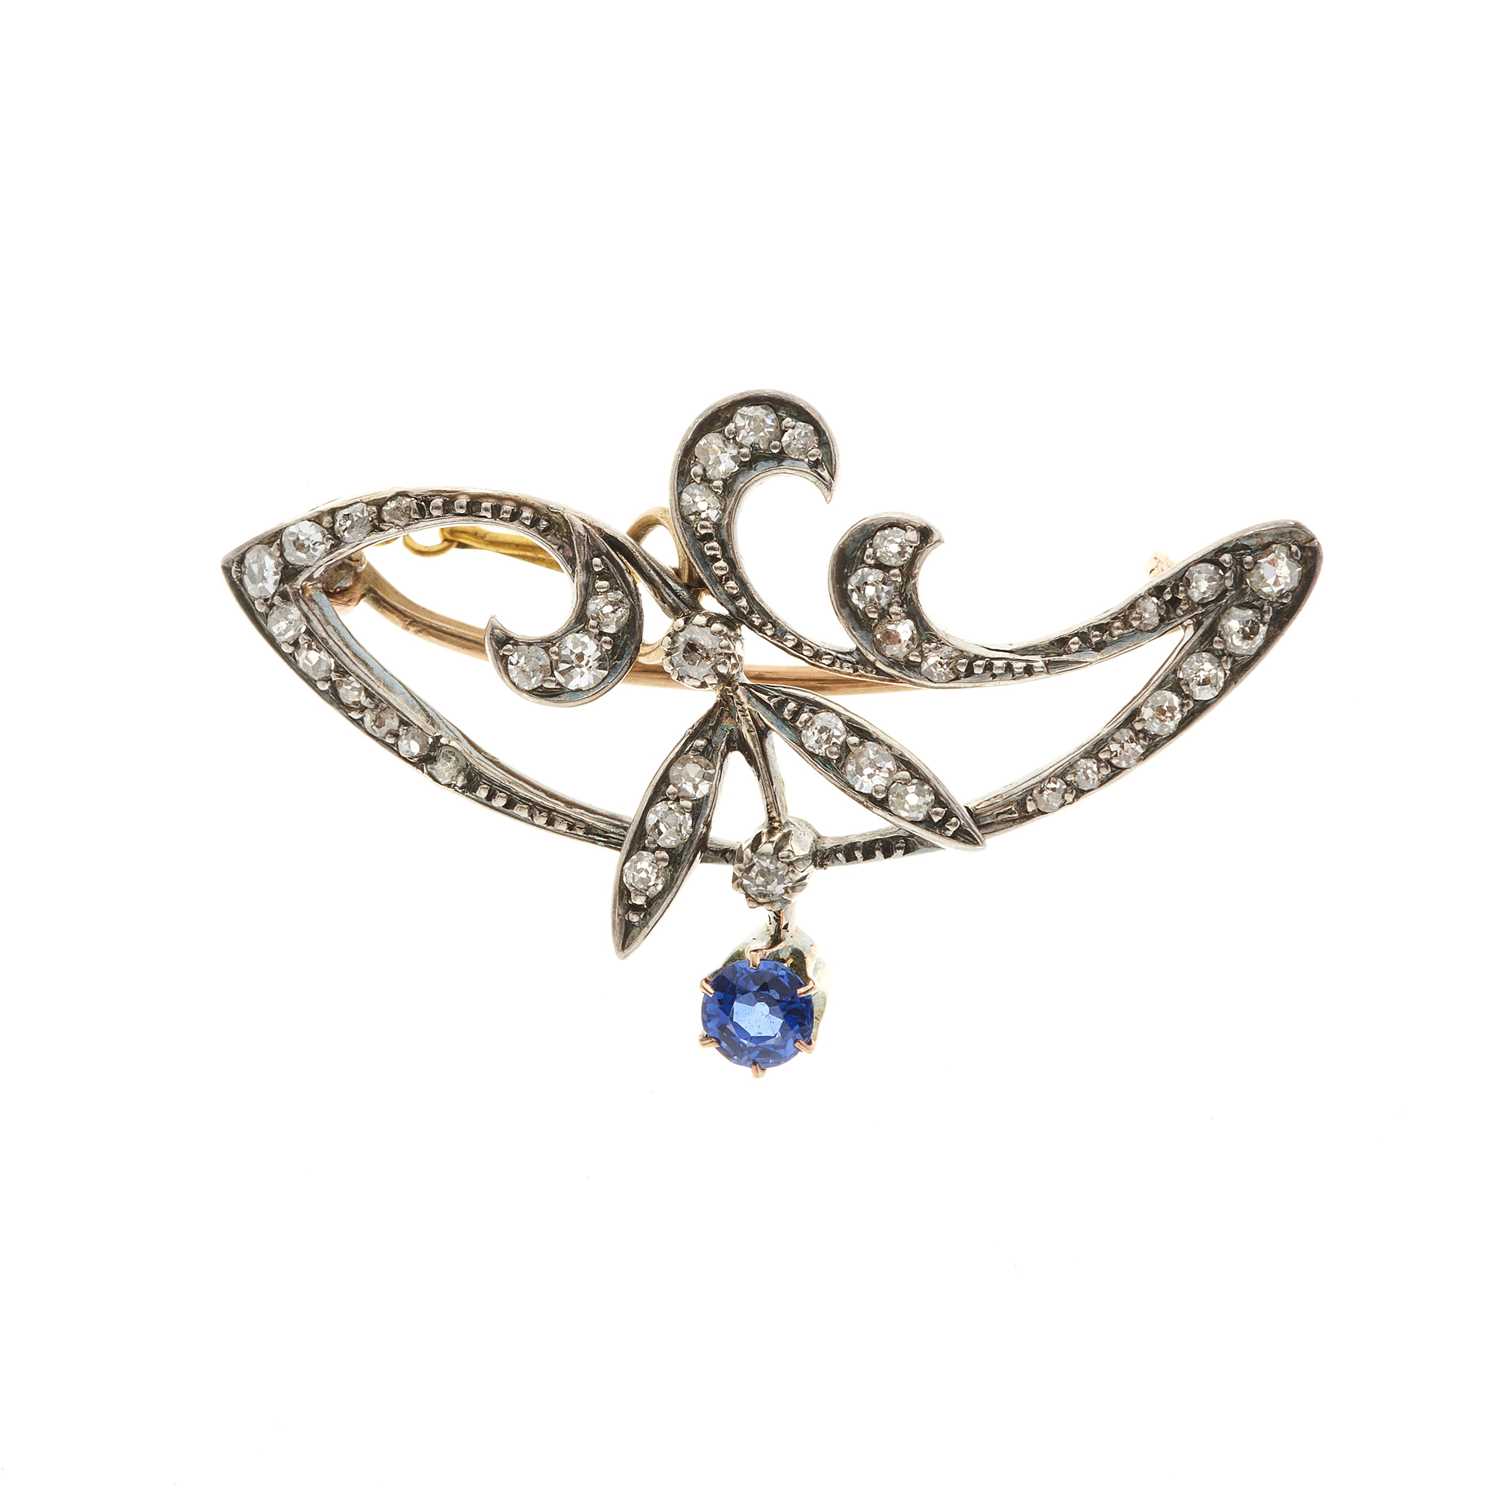 Lot 16 - An Art Nouveau diamond and sapphire foliate brooch